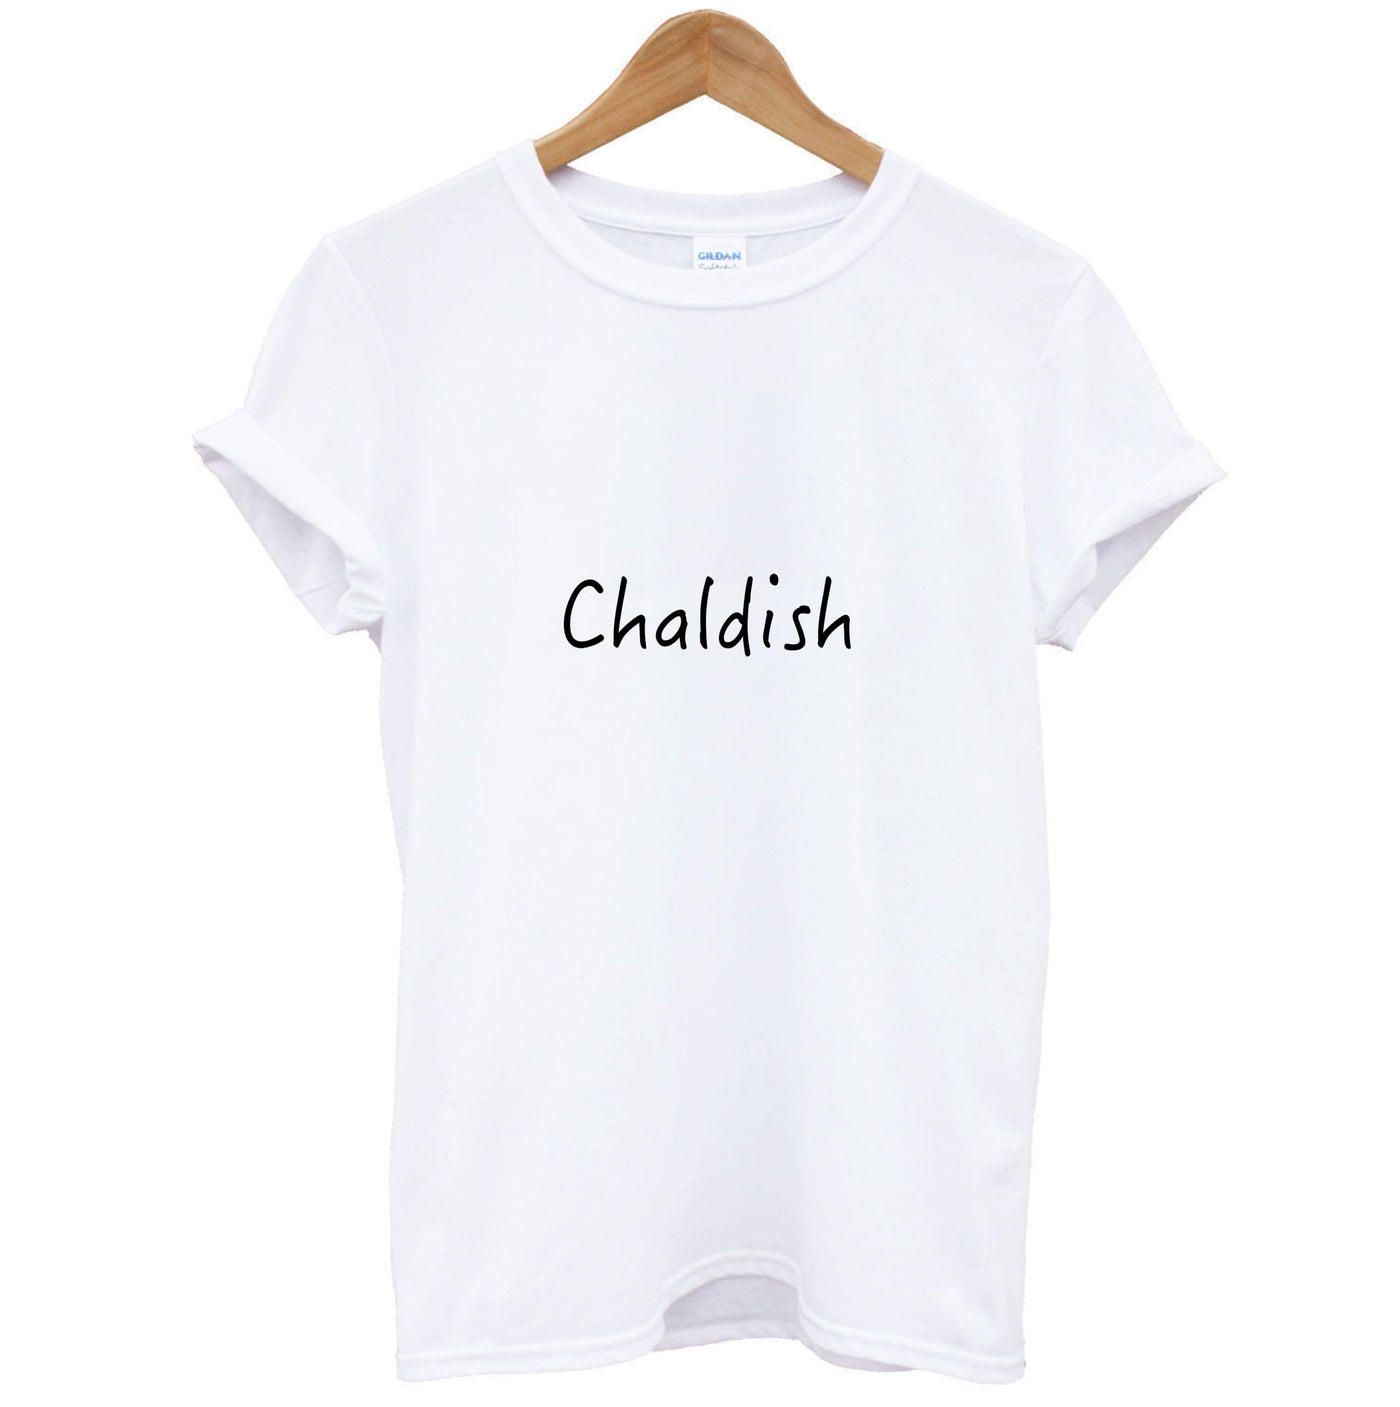 Chaldish - Islanders T-Shirt